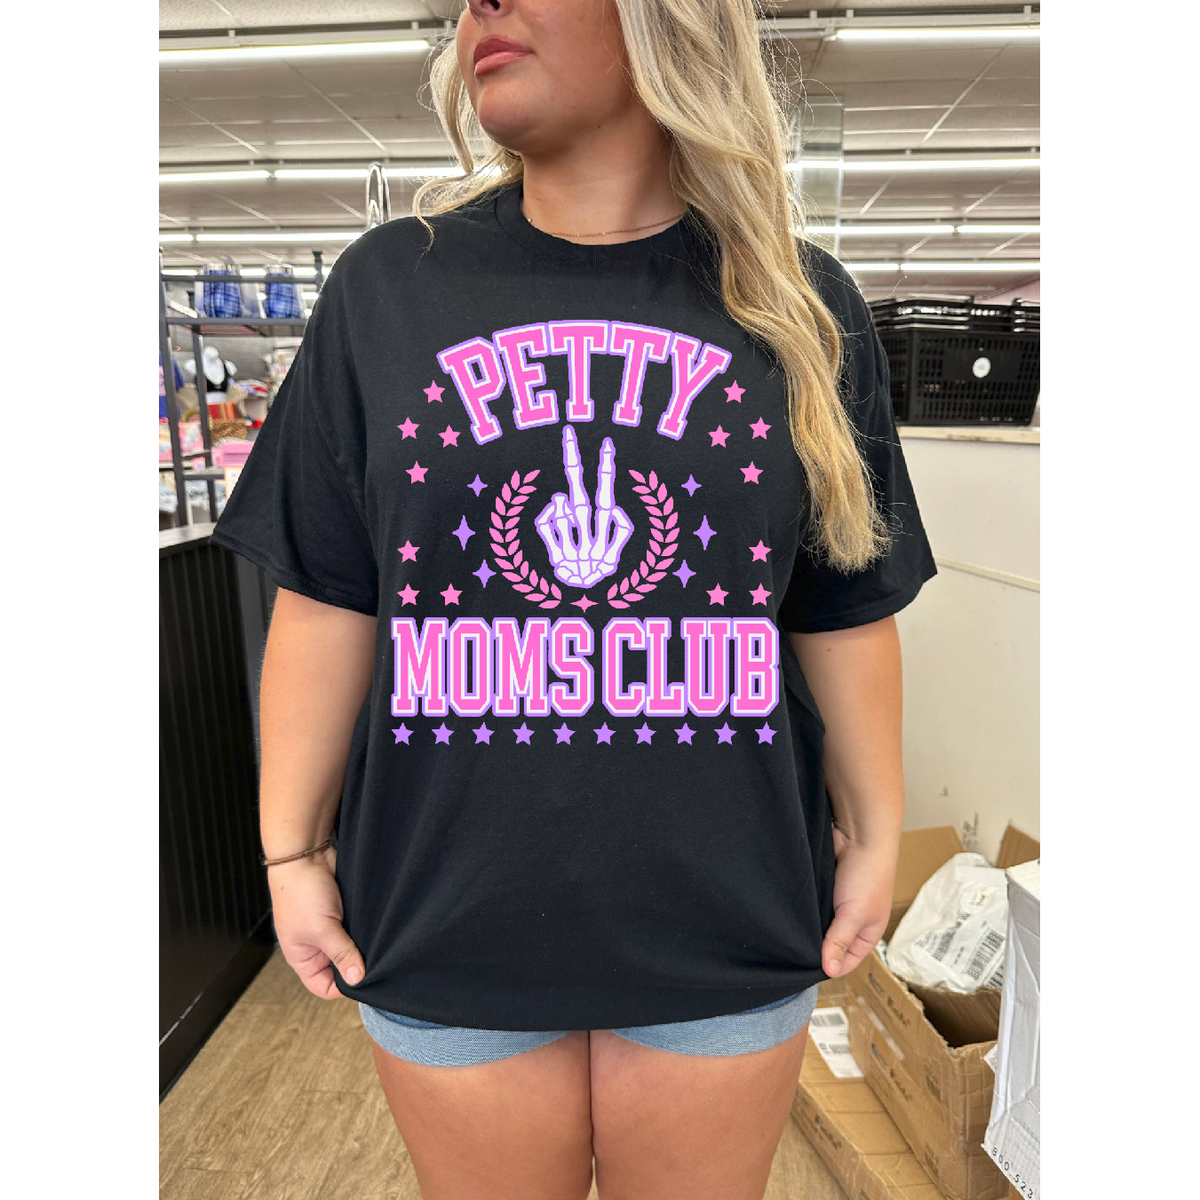 Petty moms Club tee or Sweatshirt